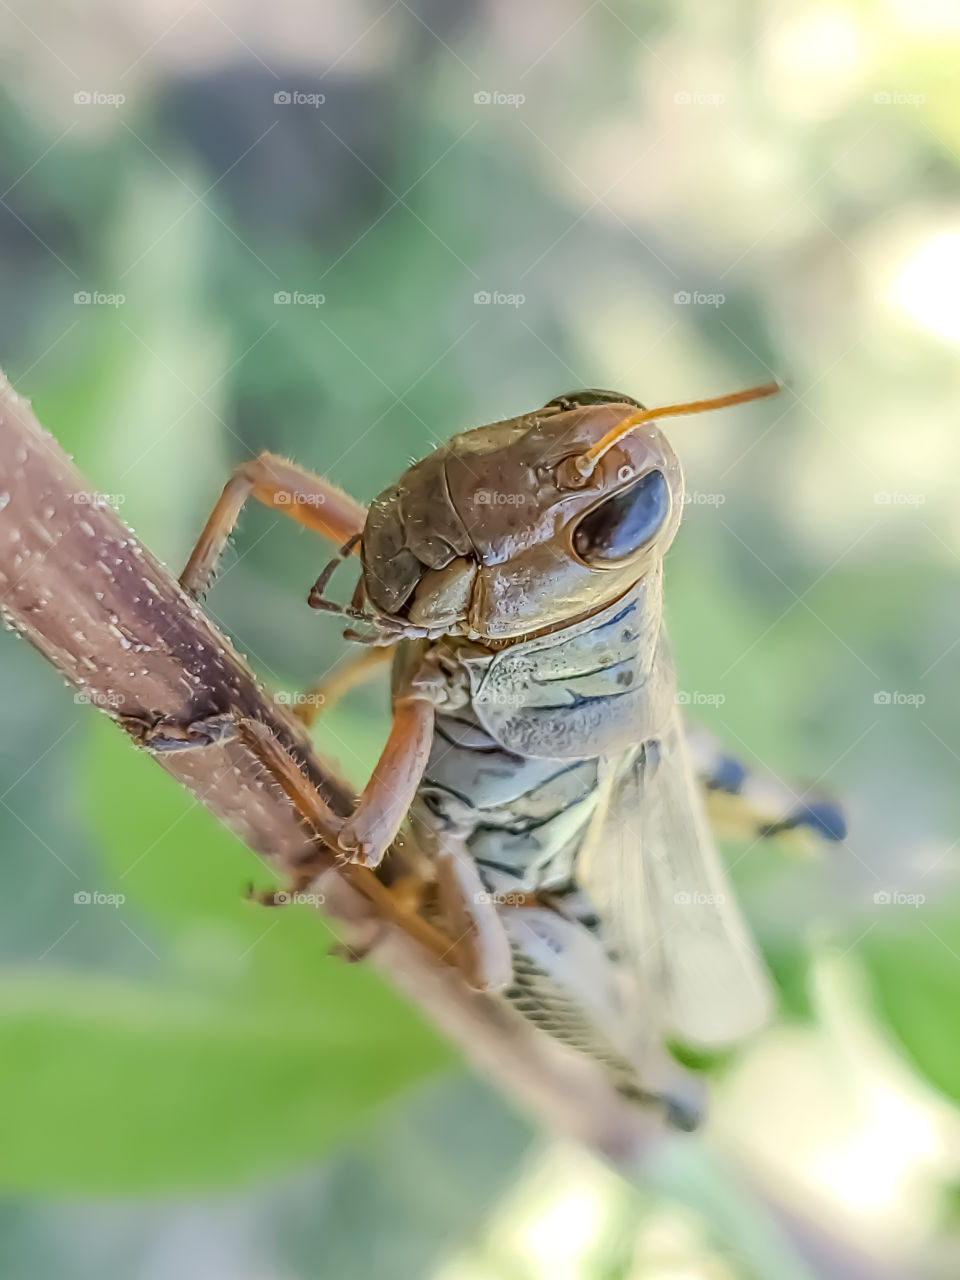 Macro of a  light colored grasshopper climbing up a plant stem